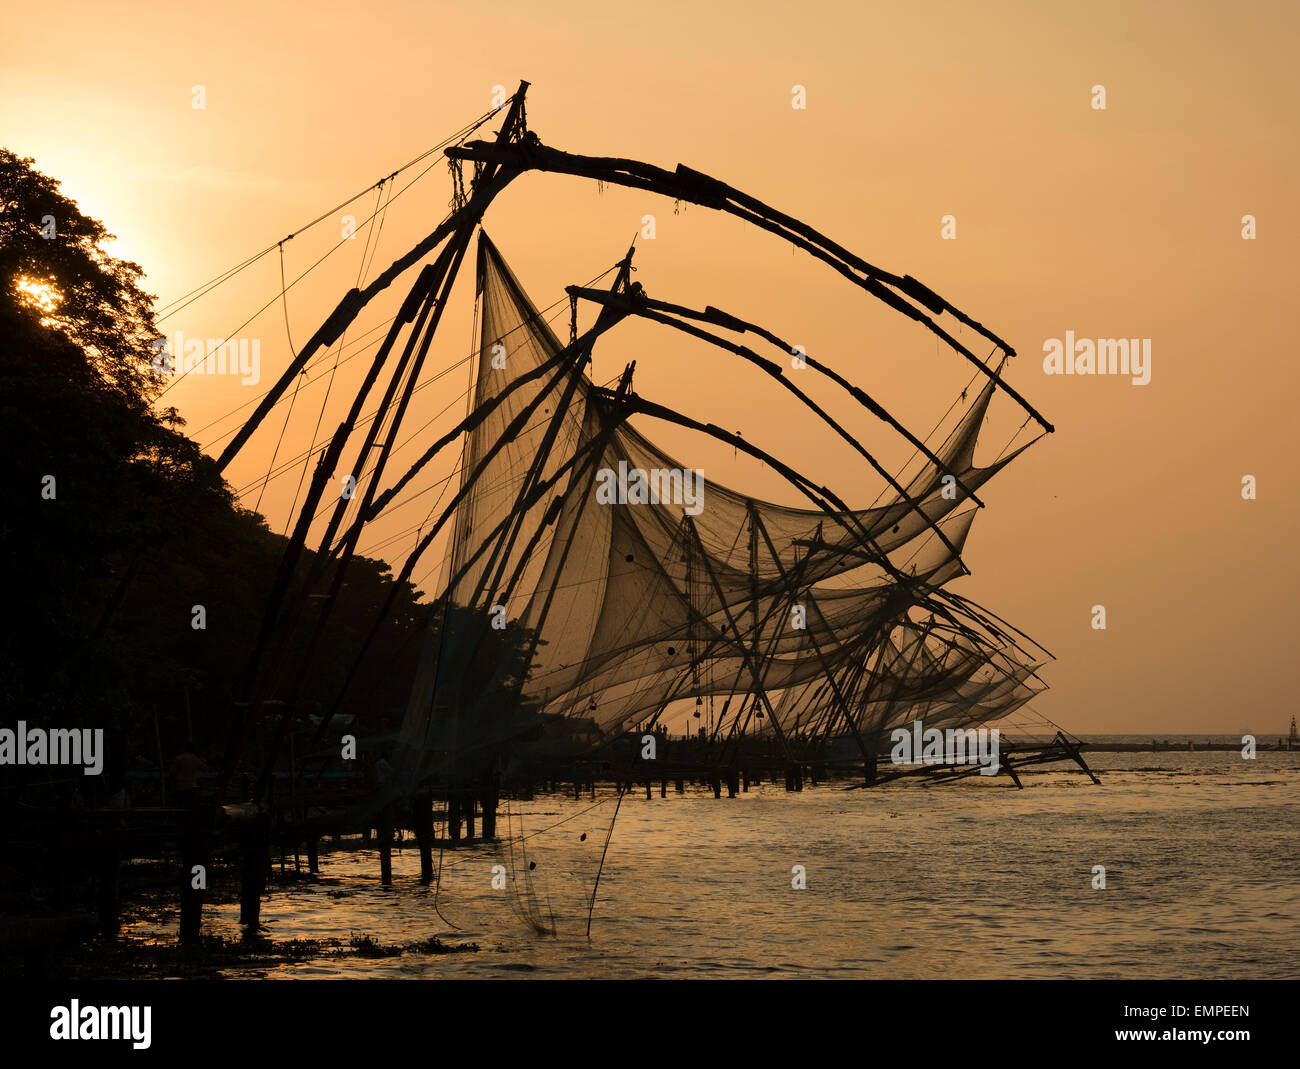 Chinesische Fischernetze, Sonnenuntergang, Arabisches Meer, Kochi, Kerala, Südindien, Indien Stockfoto